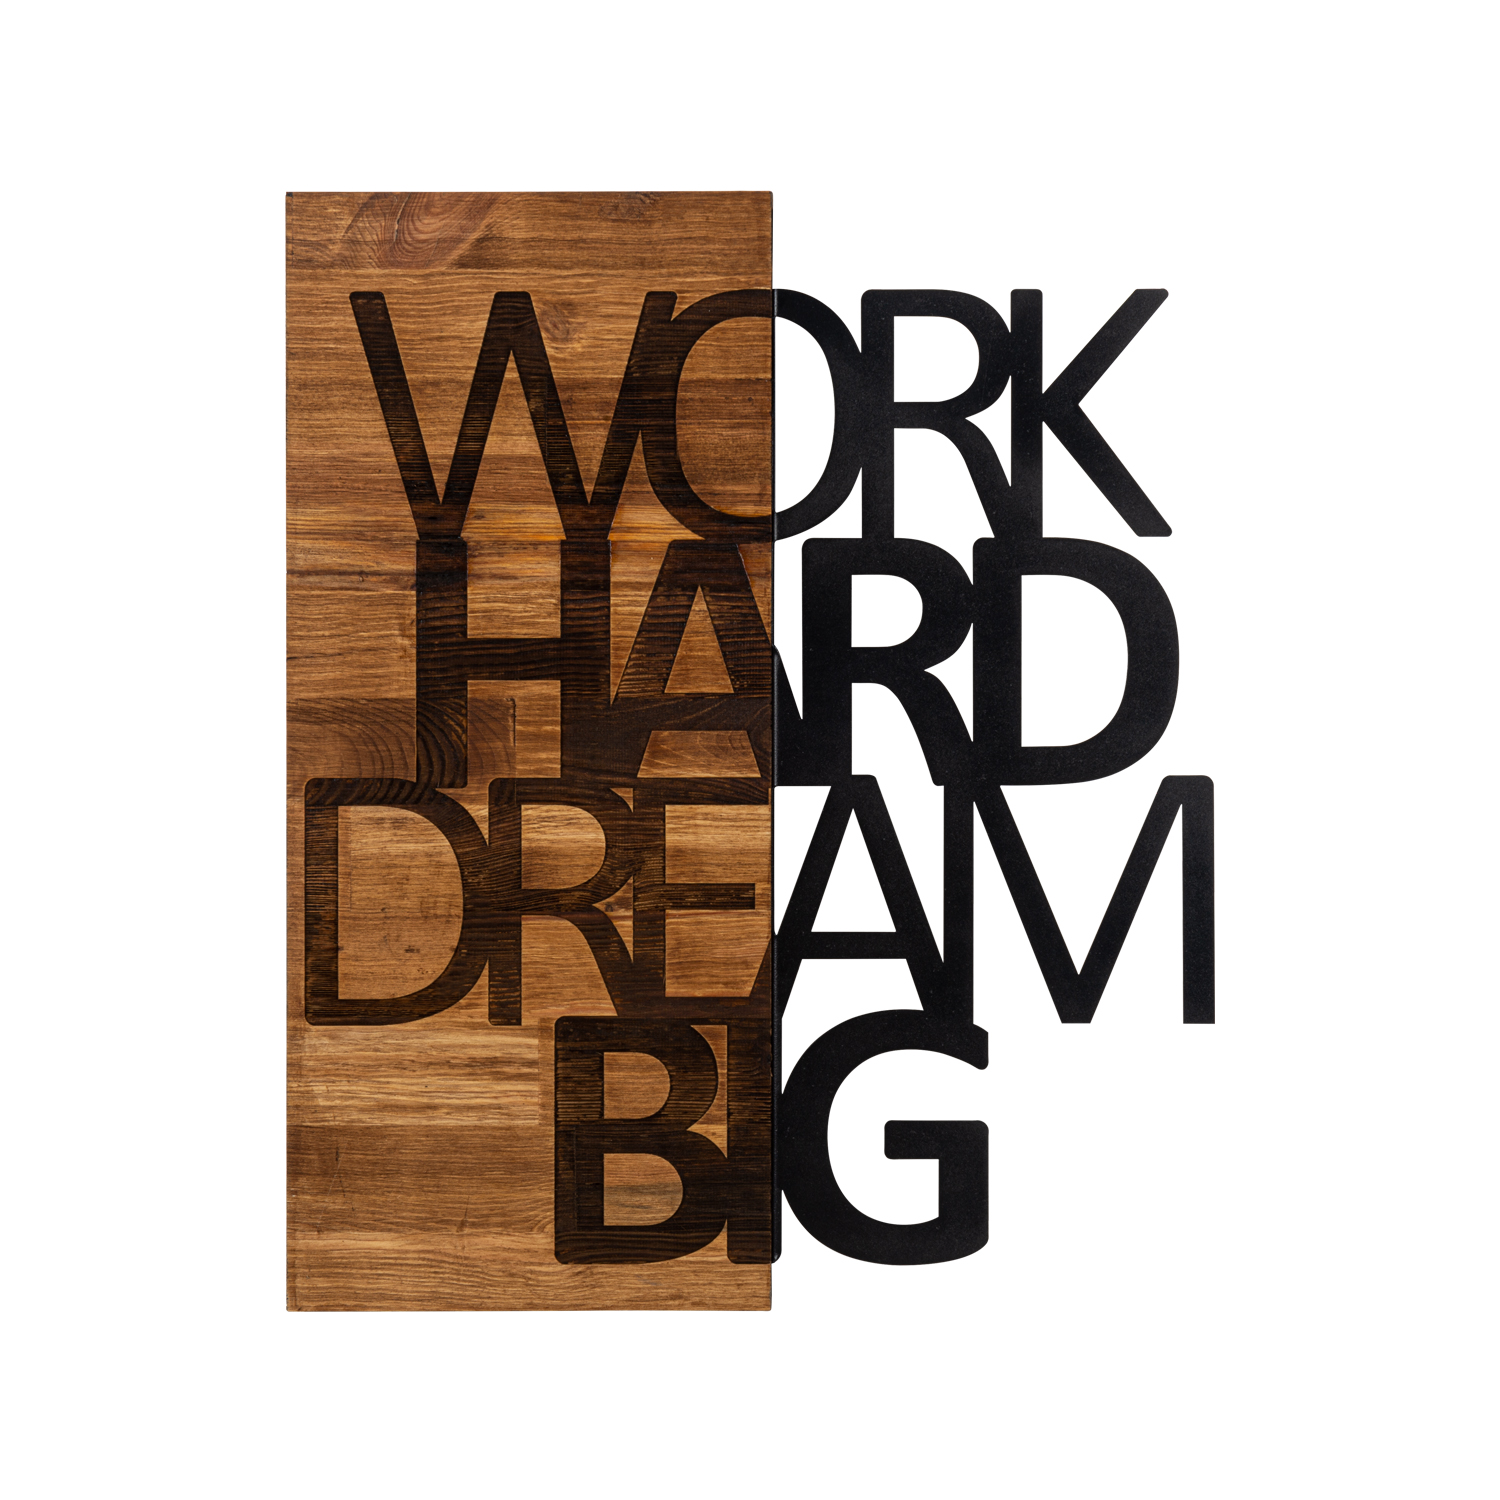 WORK HARD DREAM BIG